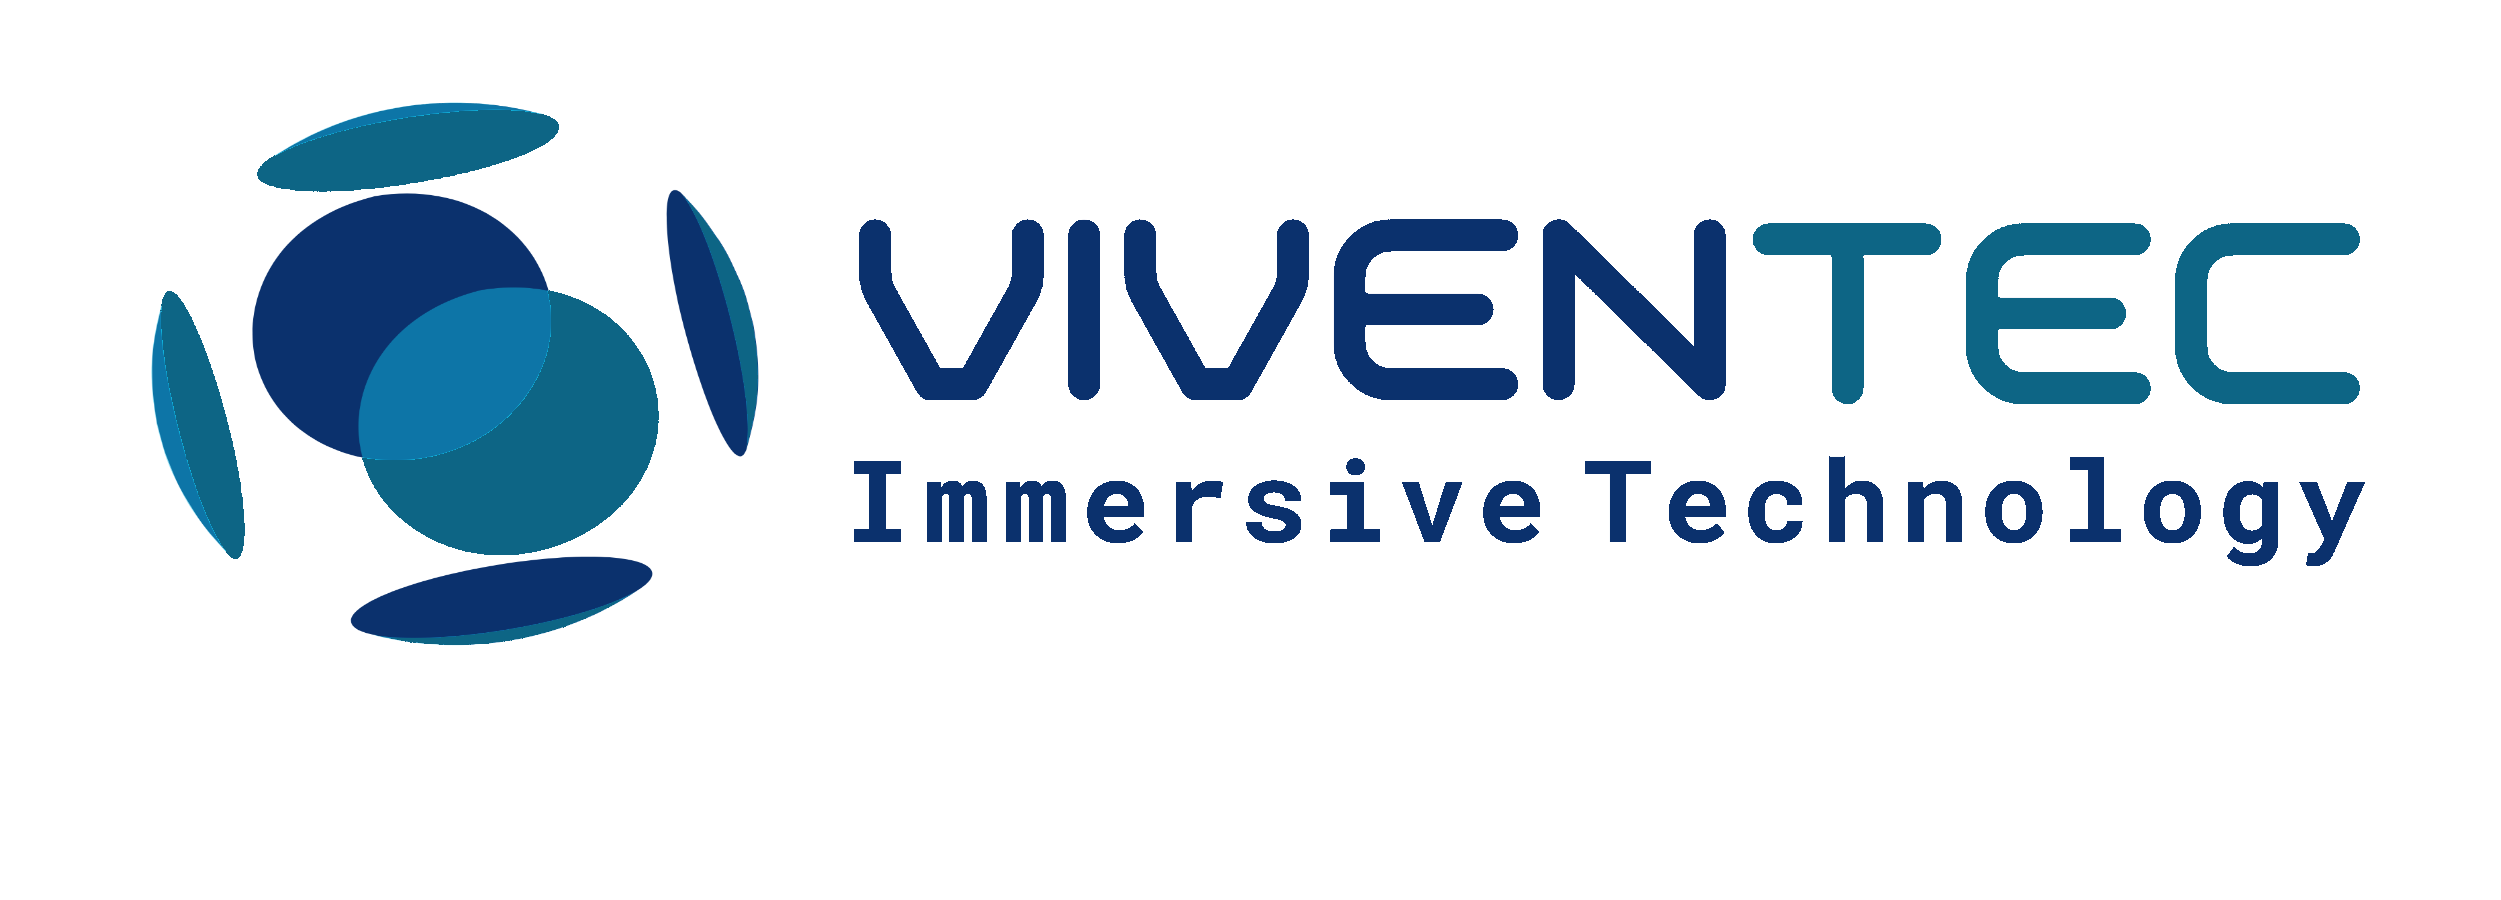 VivenTec LTD.